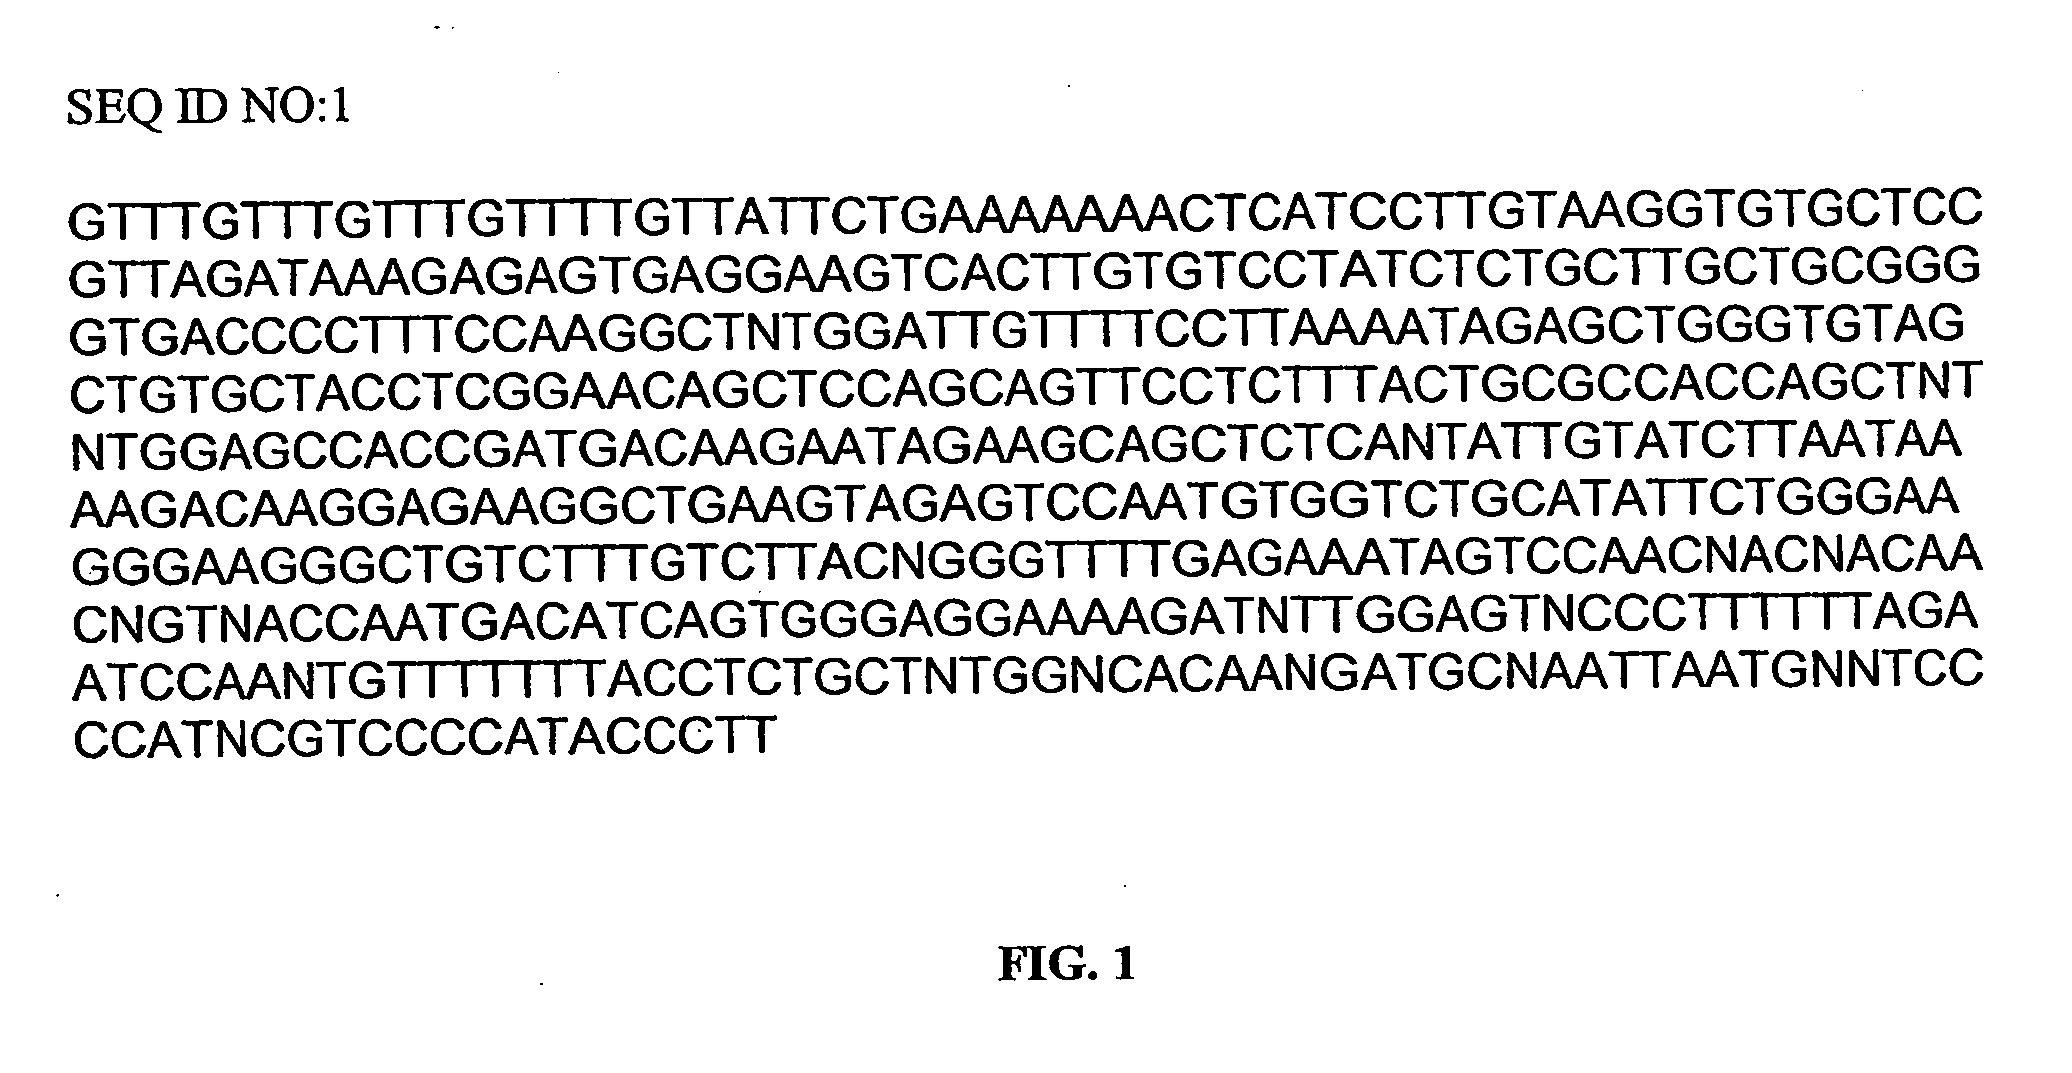 Mammalian genes involved in rapamycin resistance and tumorgenesis annexin XIII genes